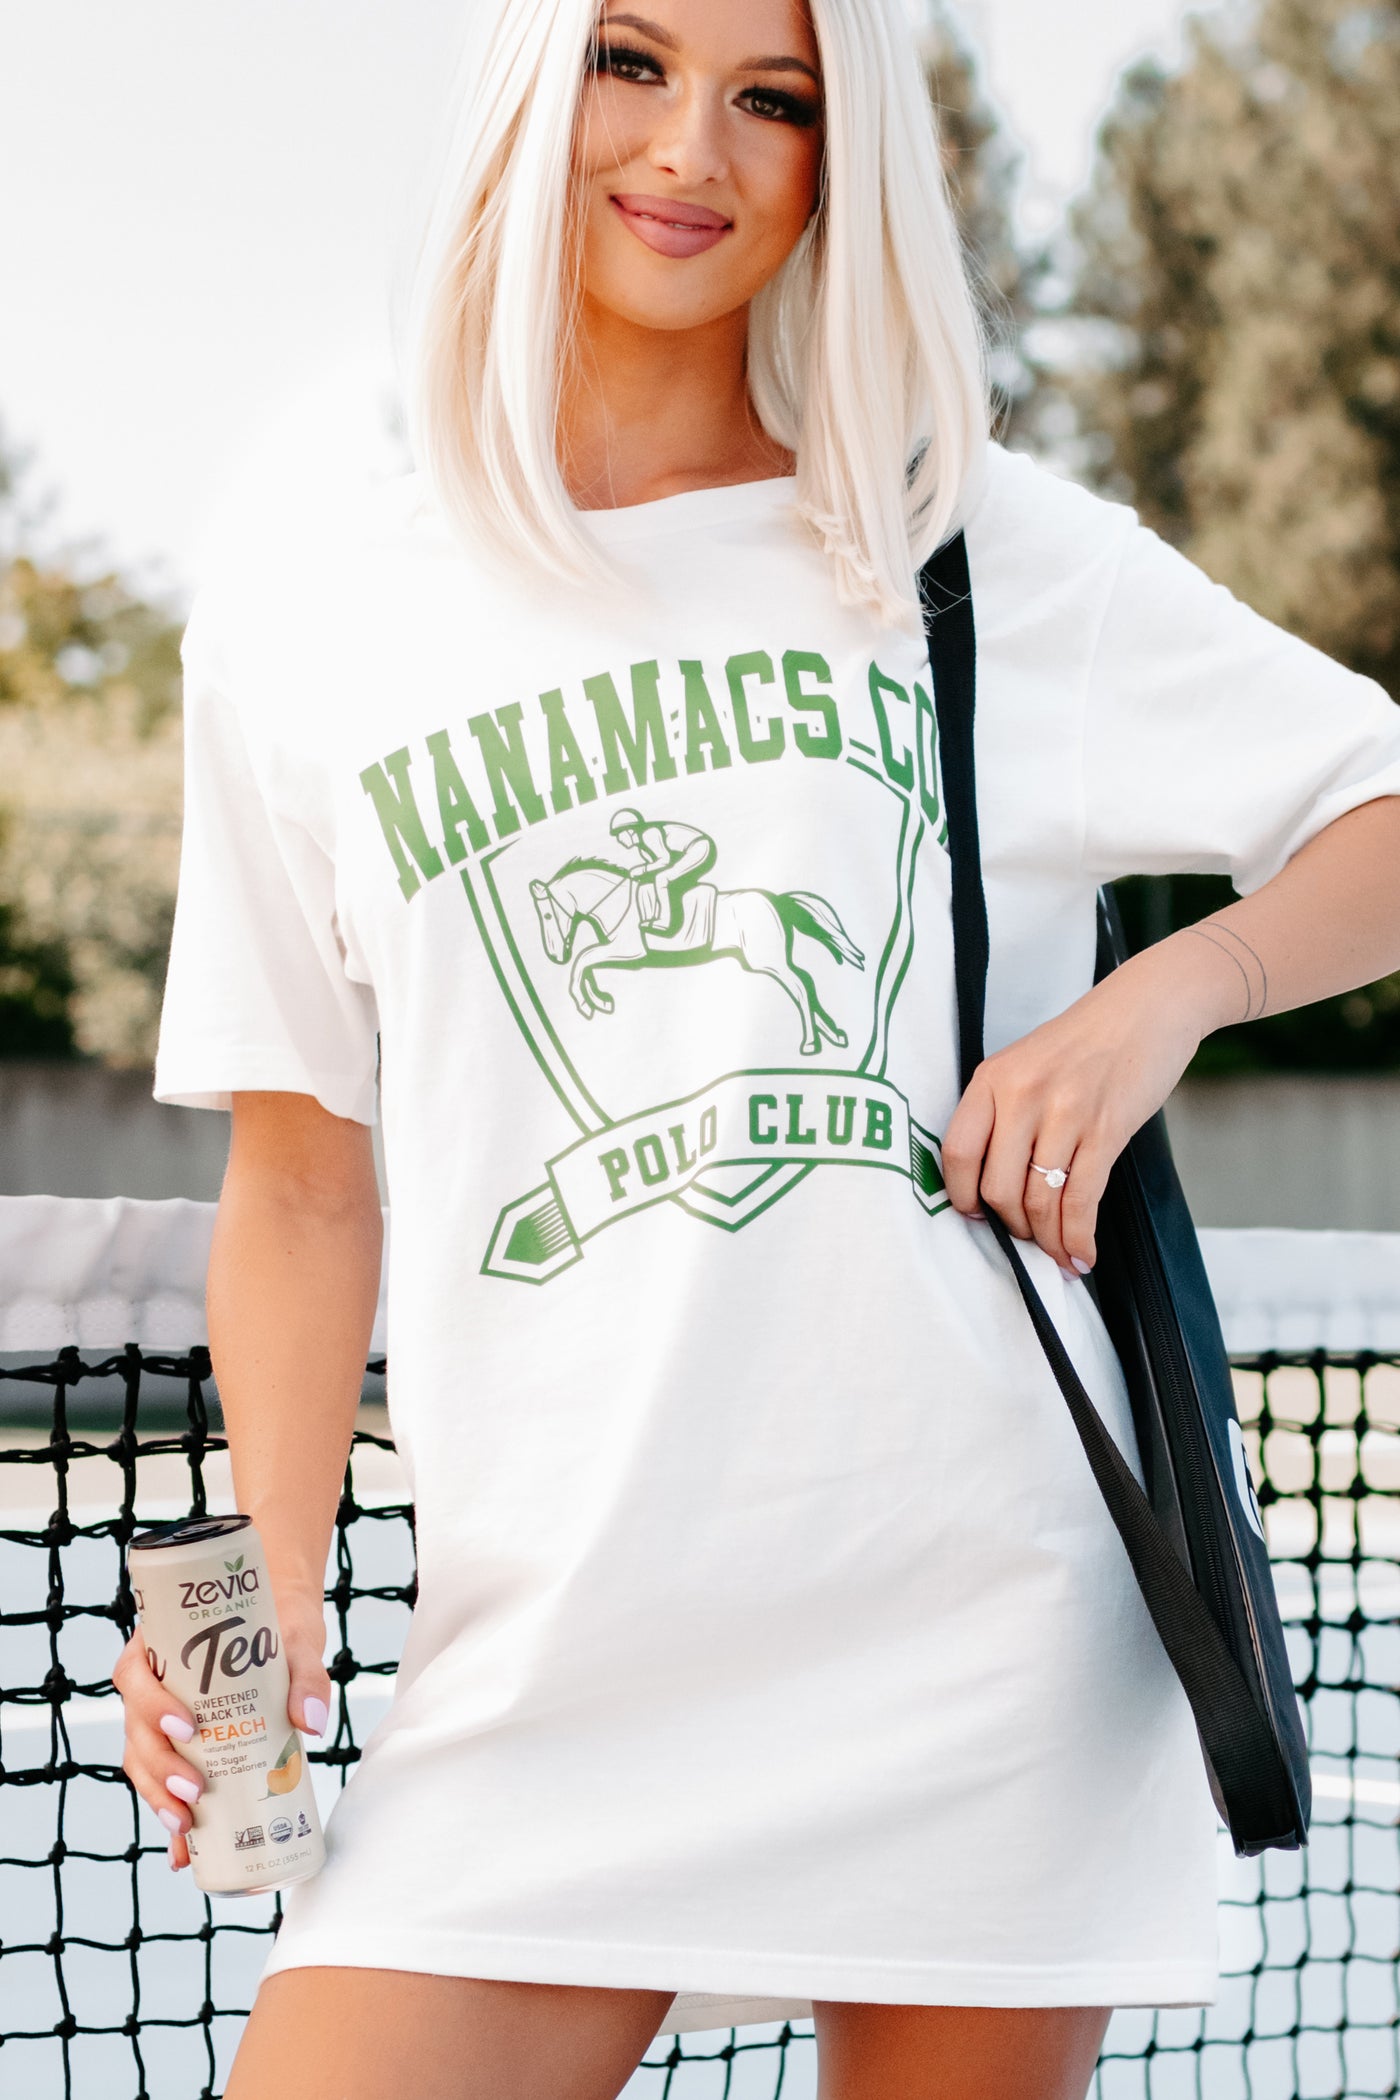 "NanaMacs Co. Polo Club" Graphic - Multiple Shirt Options (White) - Print On Demand - NanaMacs